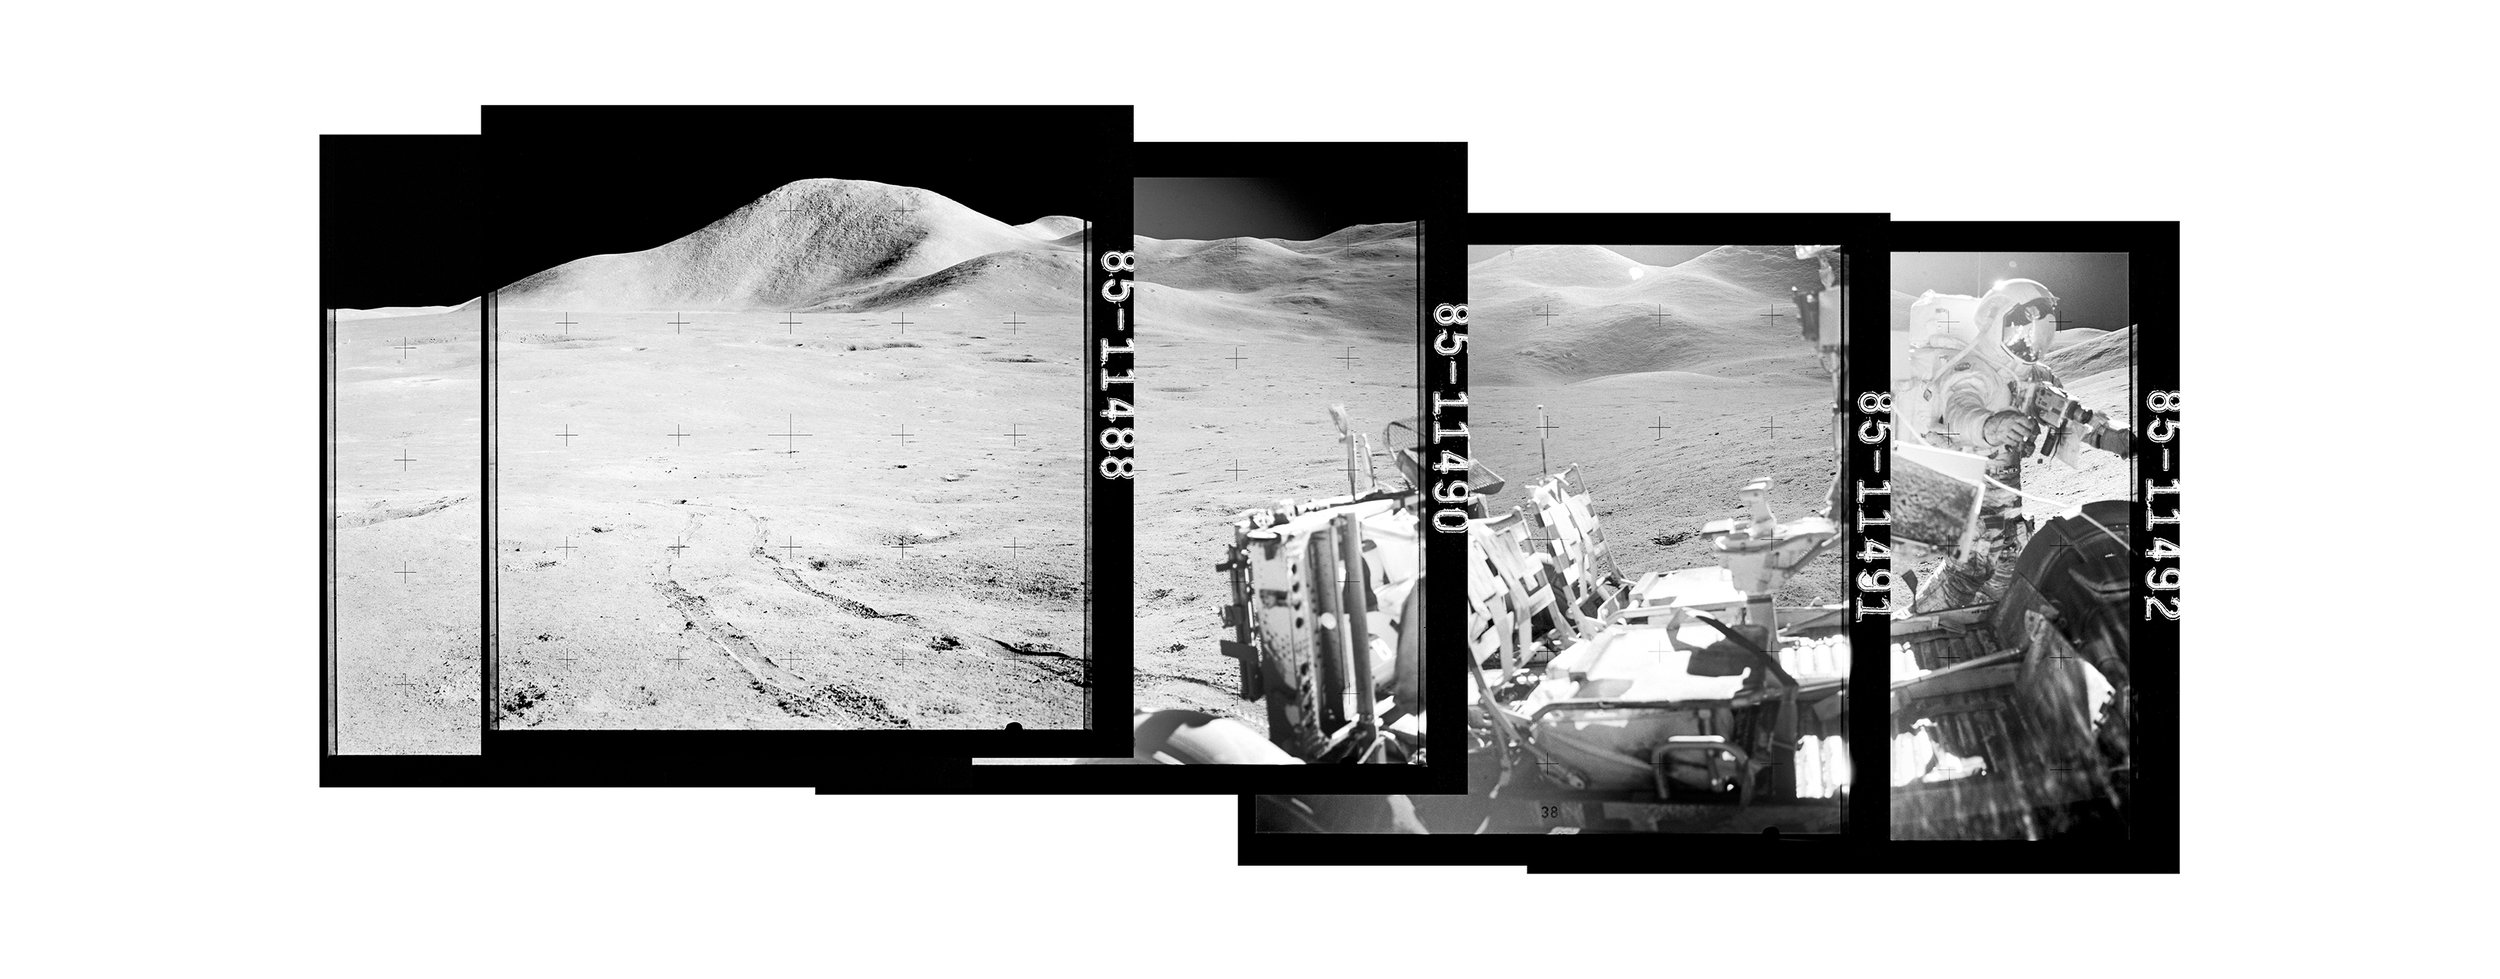  Hadley Mount, astronaut with Hasselblad medium format film camera (130x60)Apollo 15 magazine 85/LL - NASA photographs 1971 